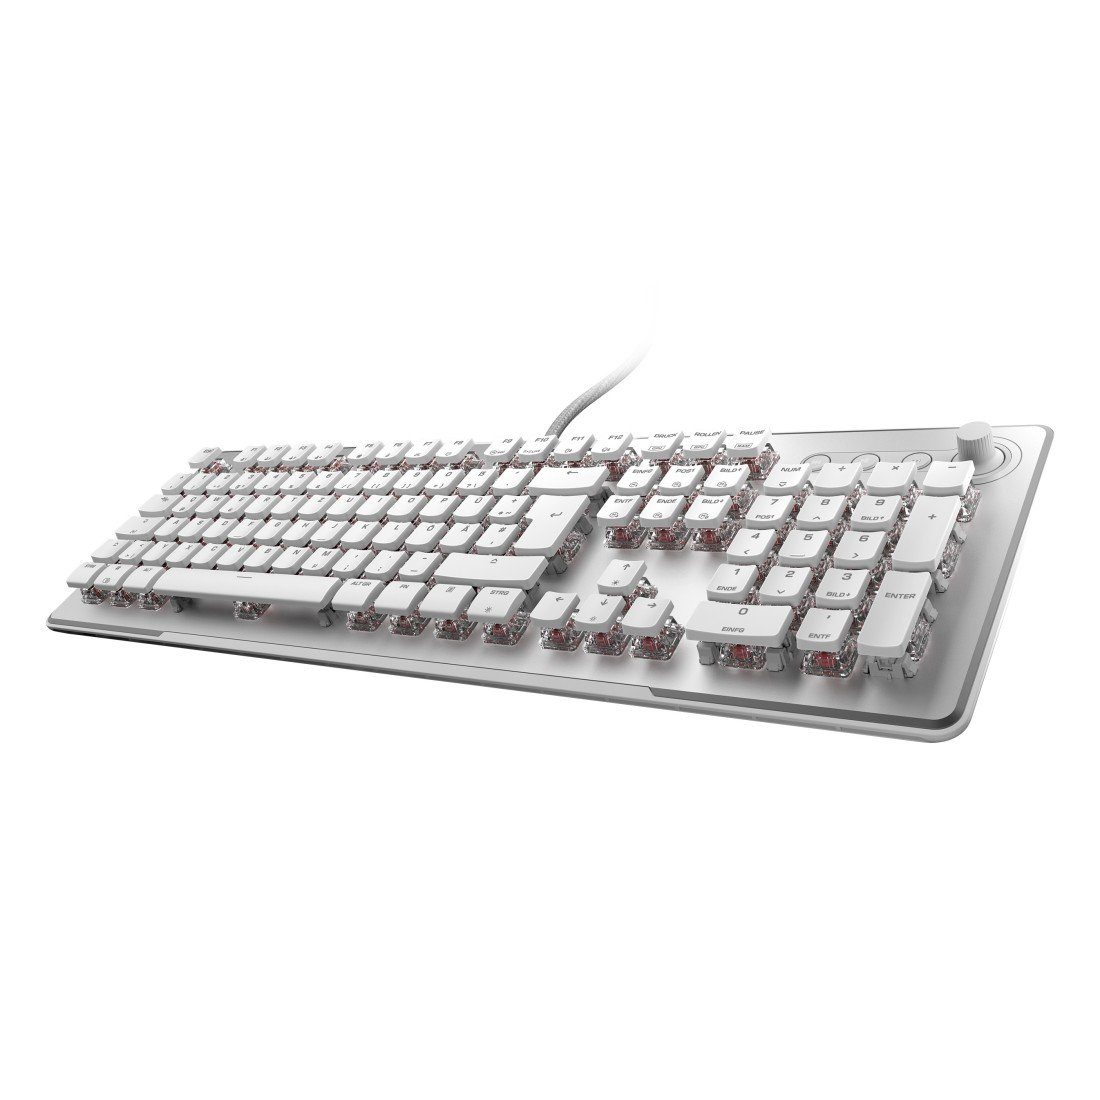 ROCCAT mechanische, Gaming-Tastatur Tasten lineare Max", "Vulcan II Gaming-Tastatur weiß